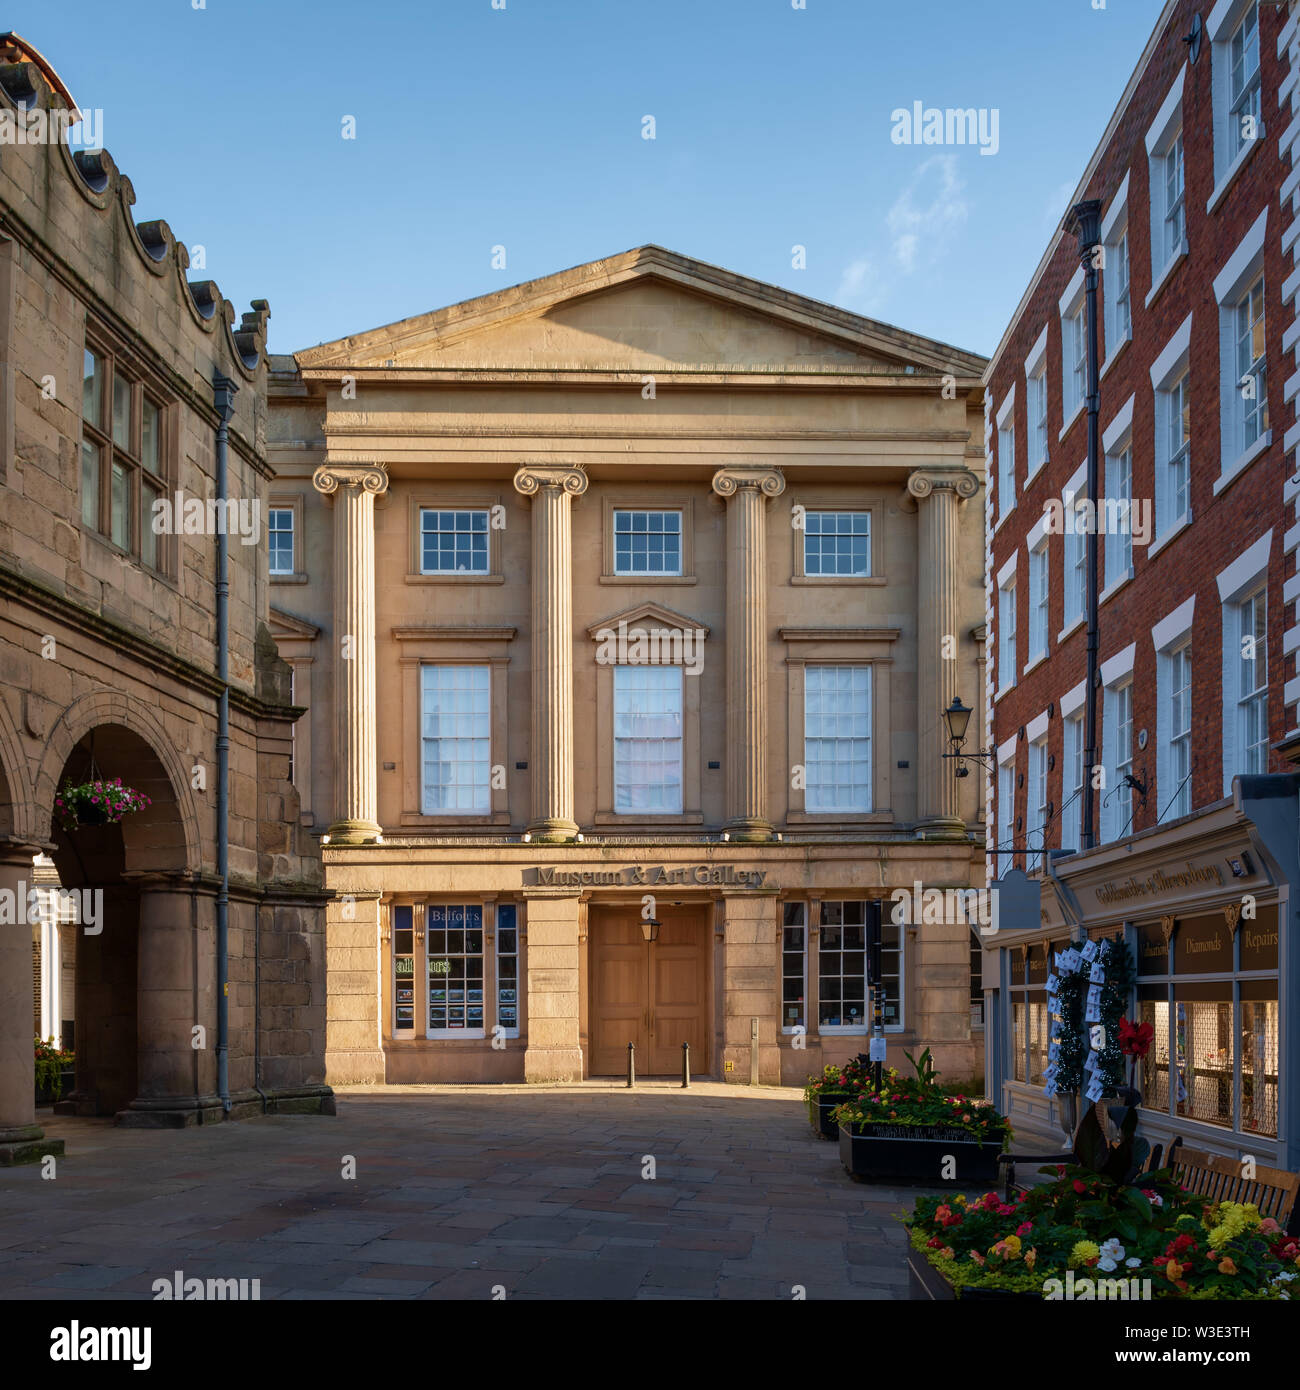 Shrewsbury Museum & Art Gallery, London, UK Banque D'Images